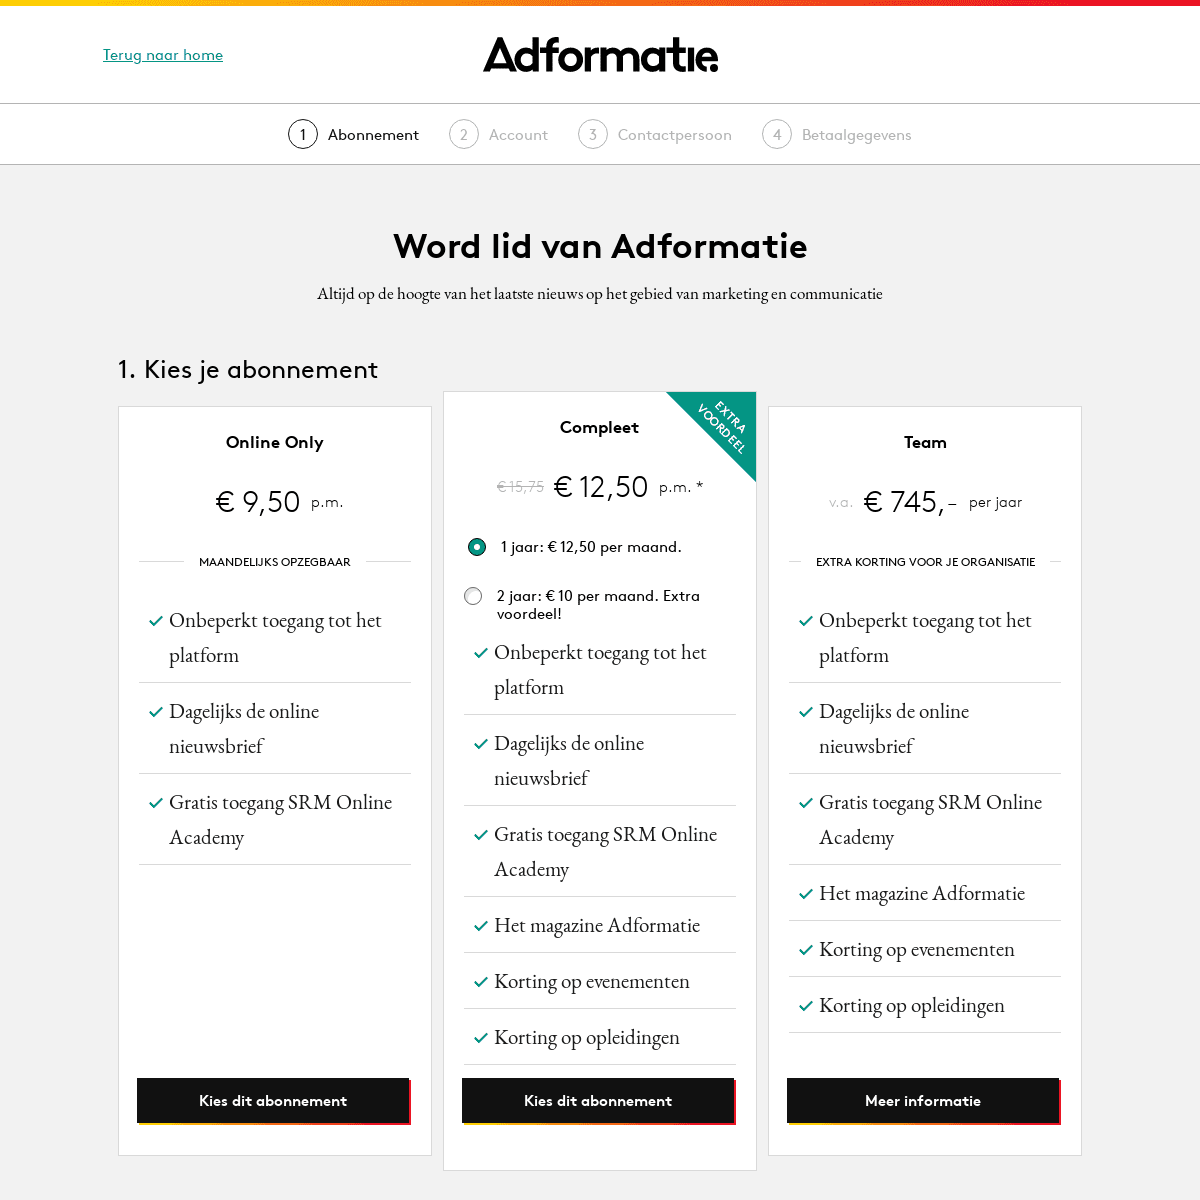 A complete backup of https://mijn.adformatie.nl/signup